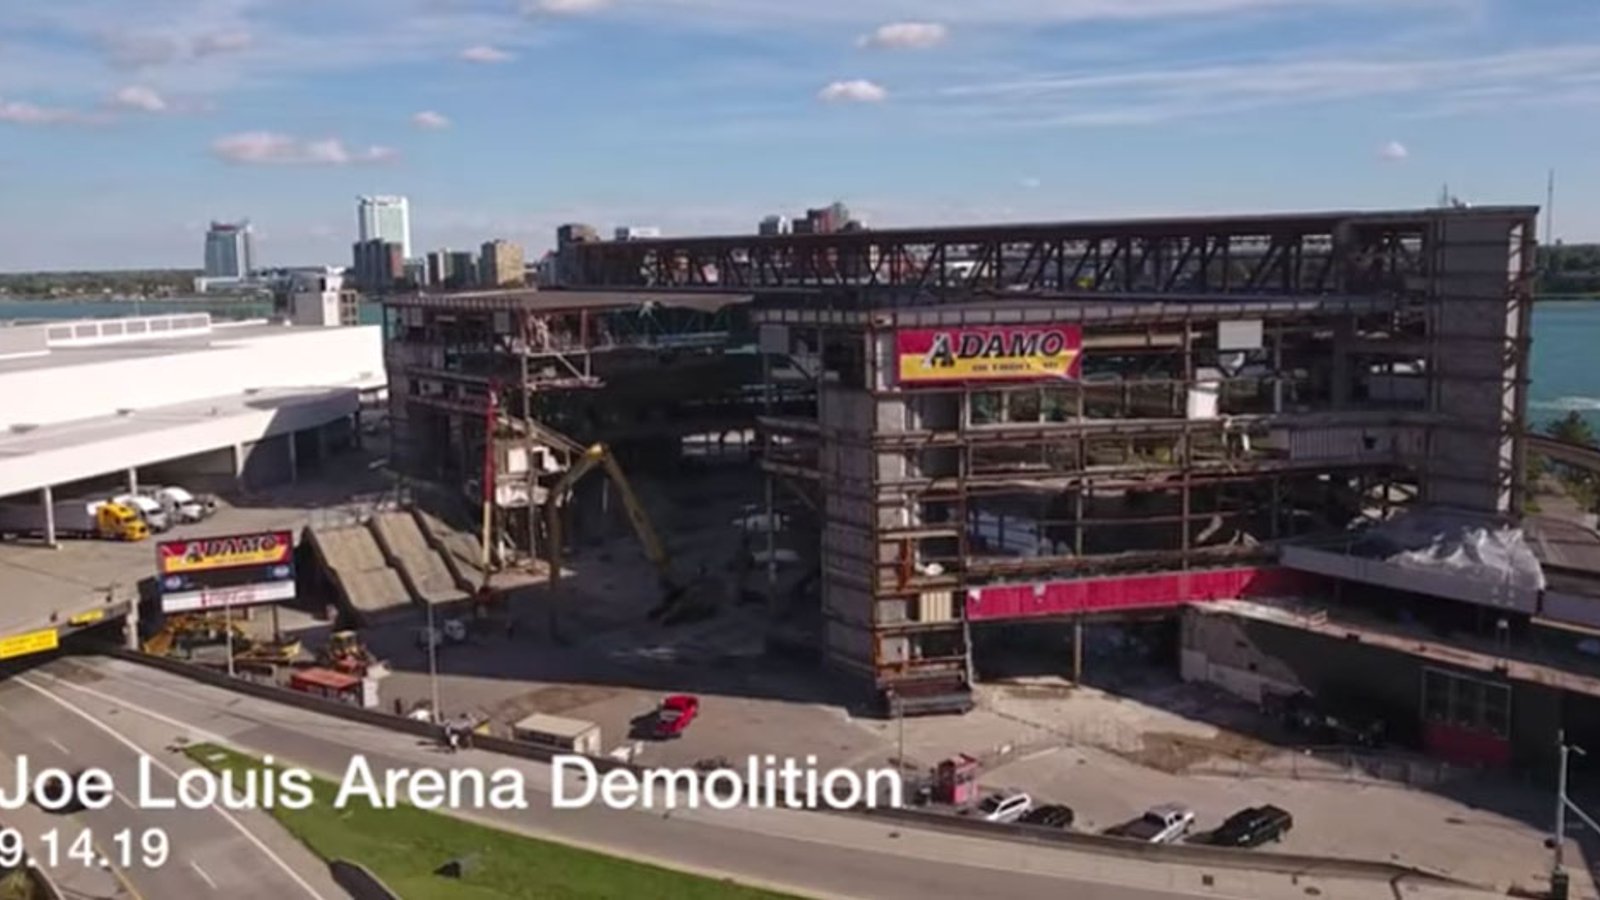 Joe Louis Arena Demolition - 9.14.19 